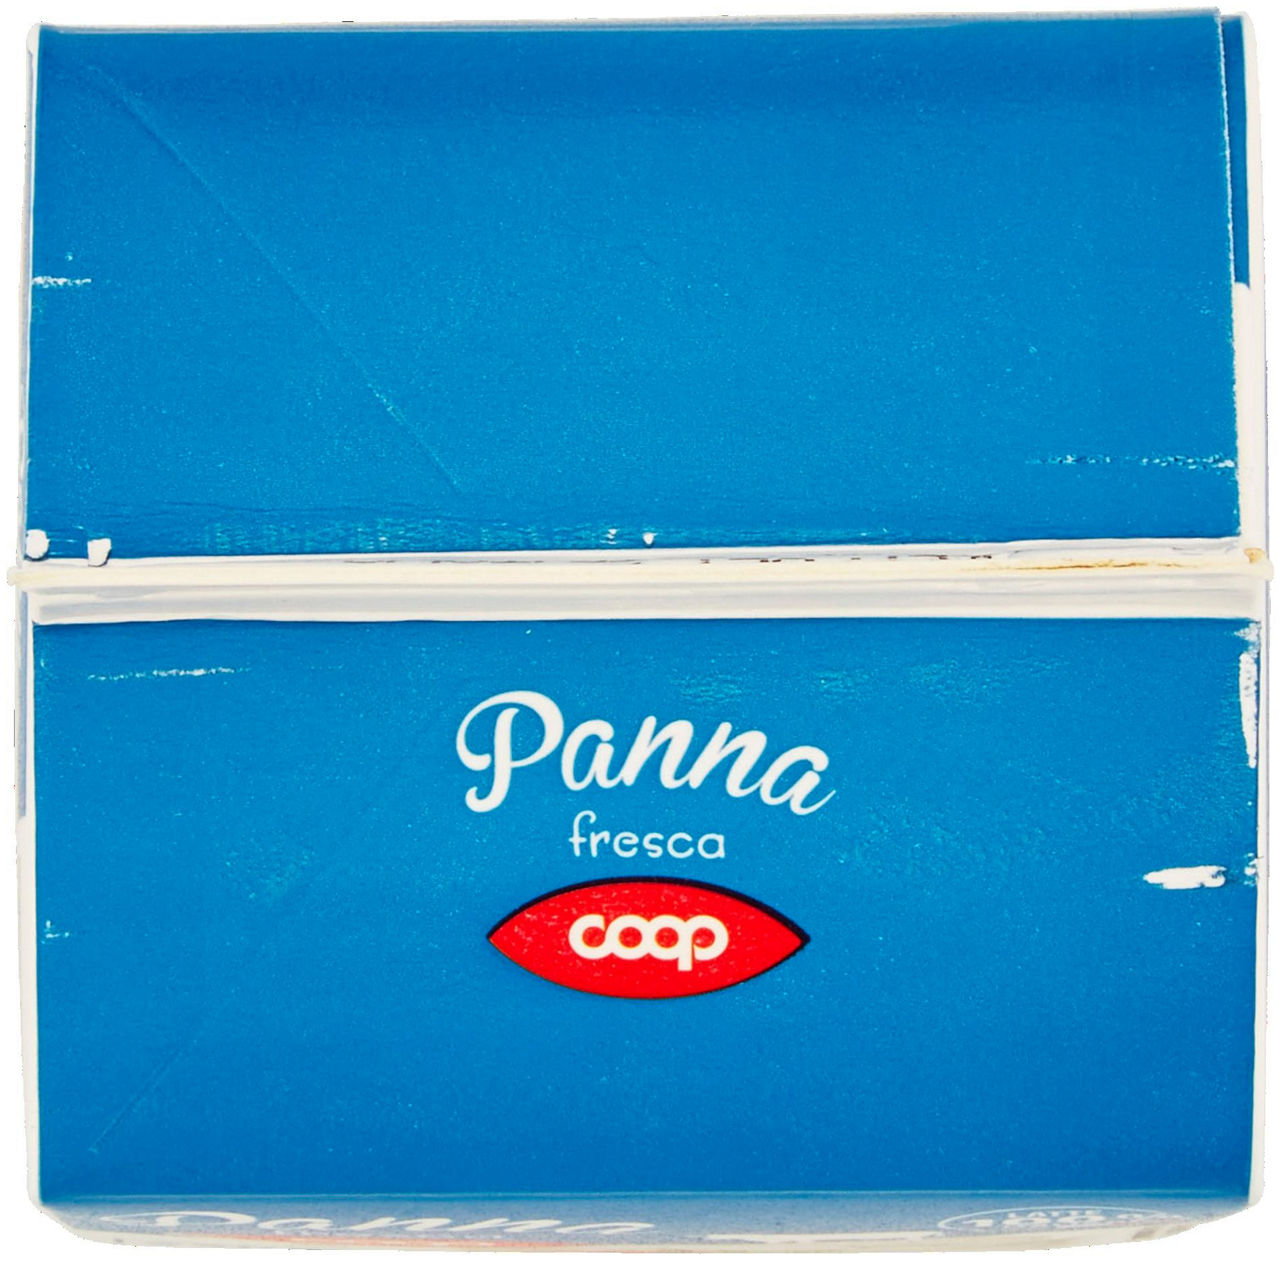 PANNA FRESCA COOP 250 ML - 4